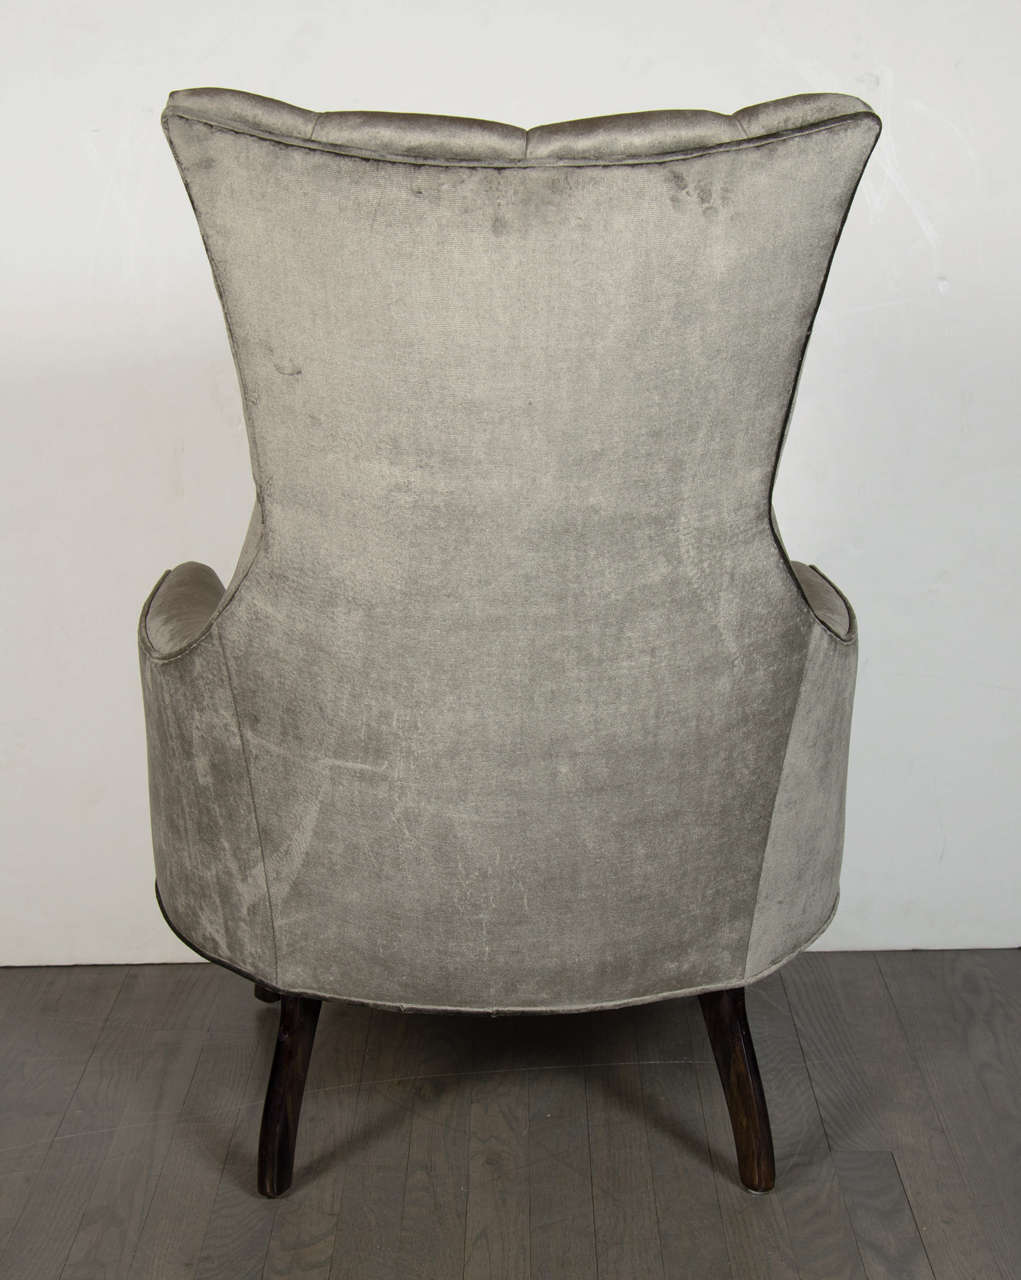 modern high back chair